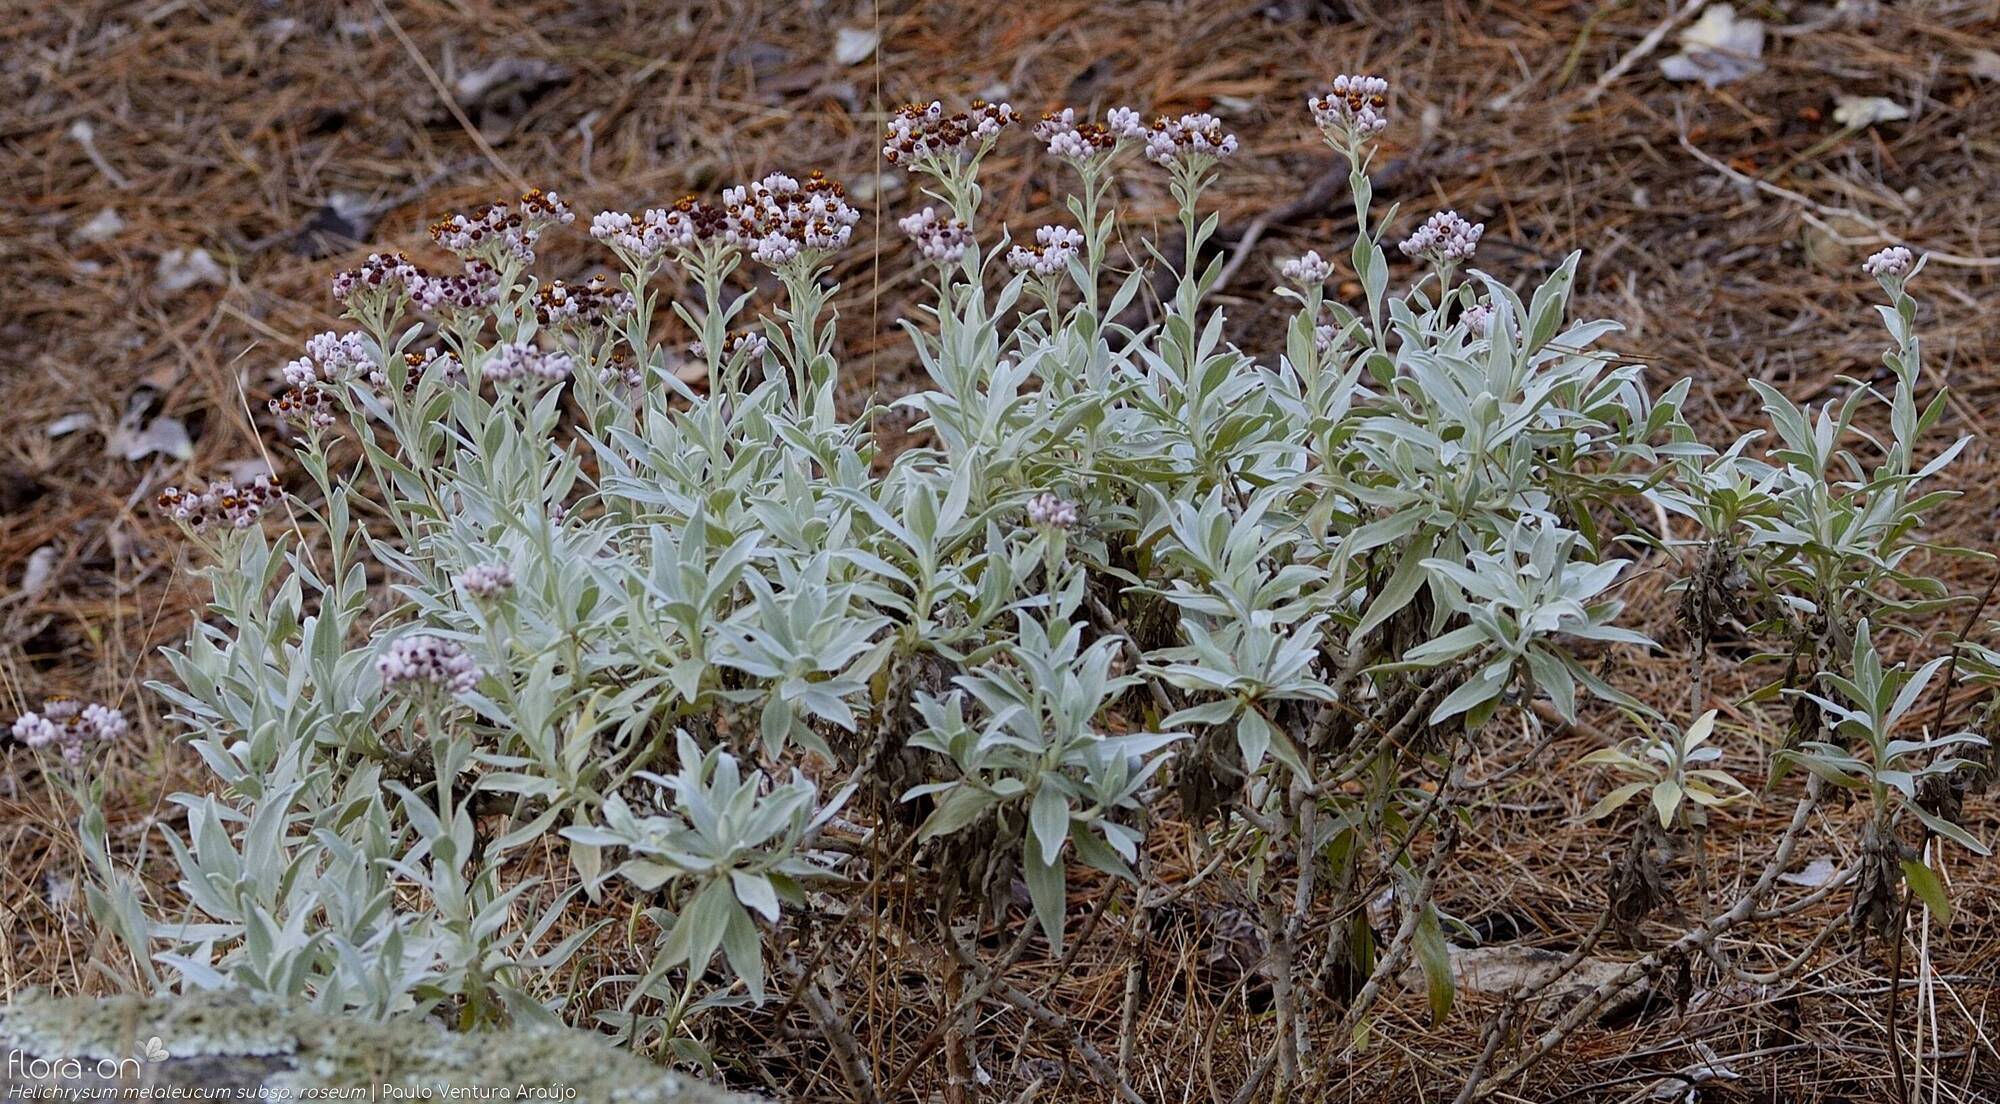 Helichrysum melaleucum - Hábito | Paulo Ventura Araújo; CC BY-NC 4.0